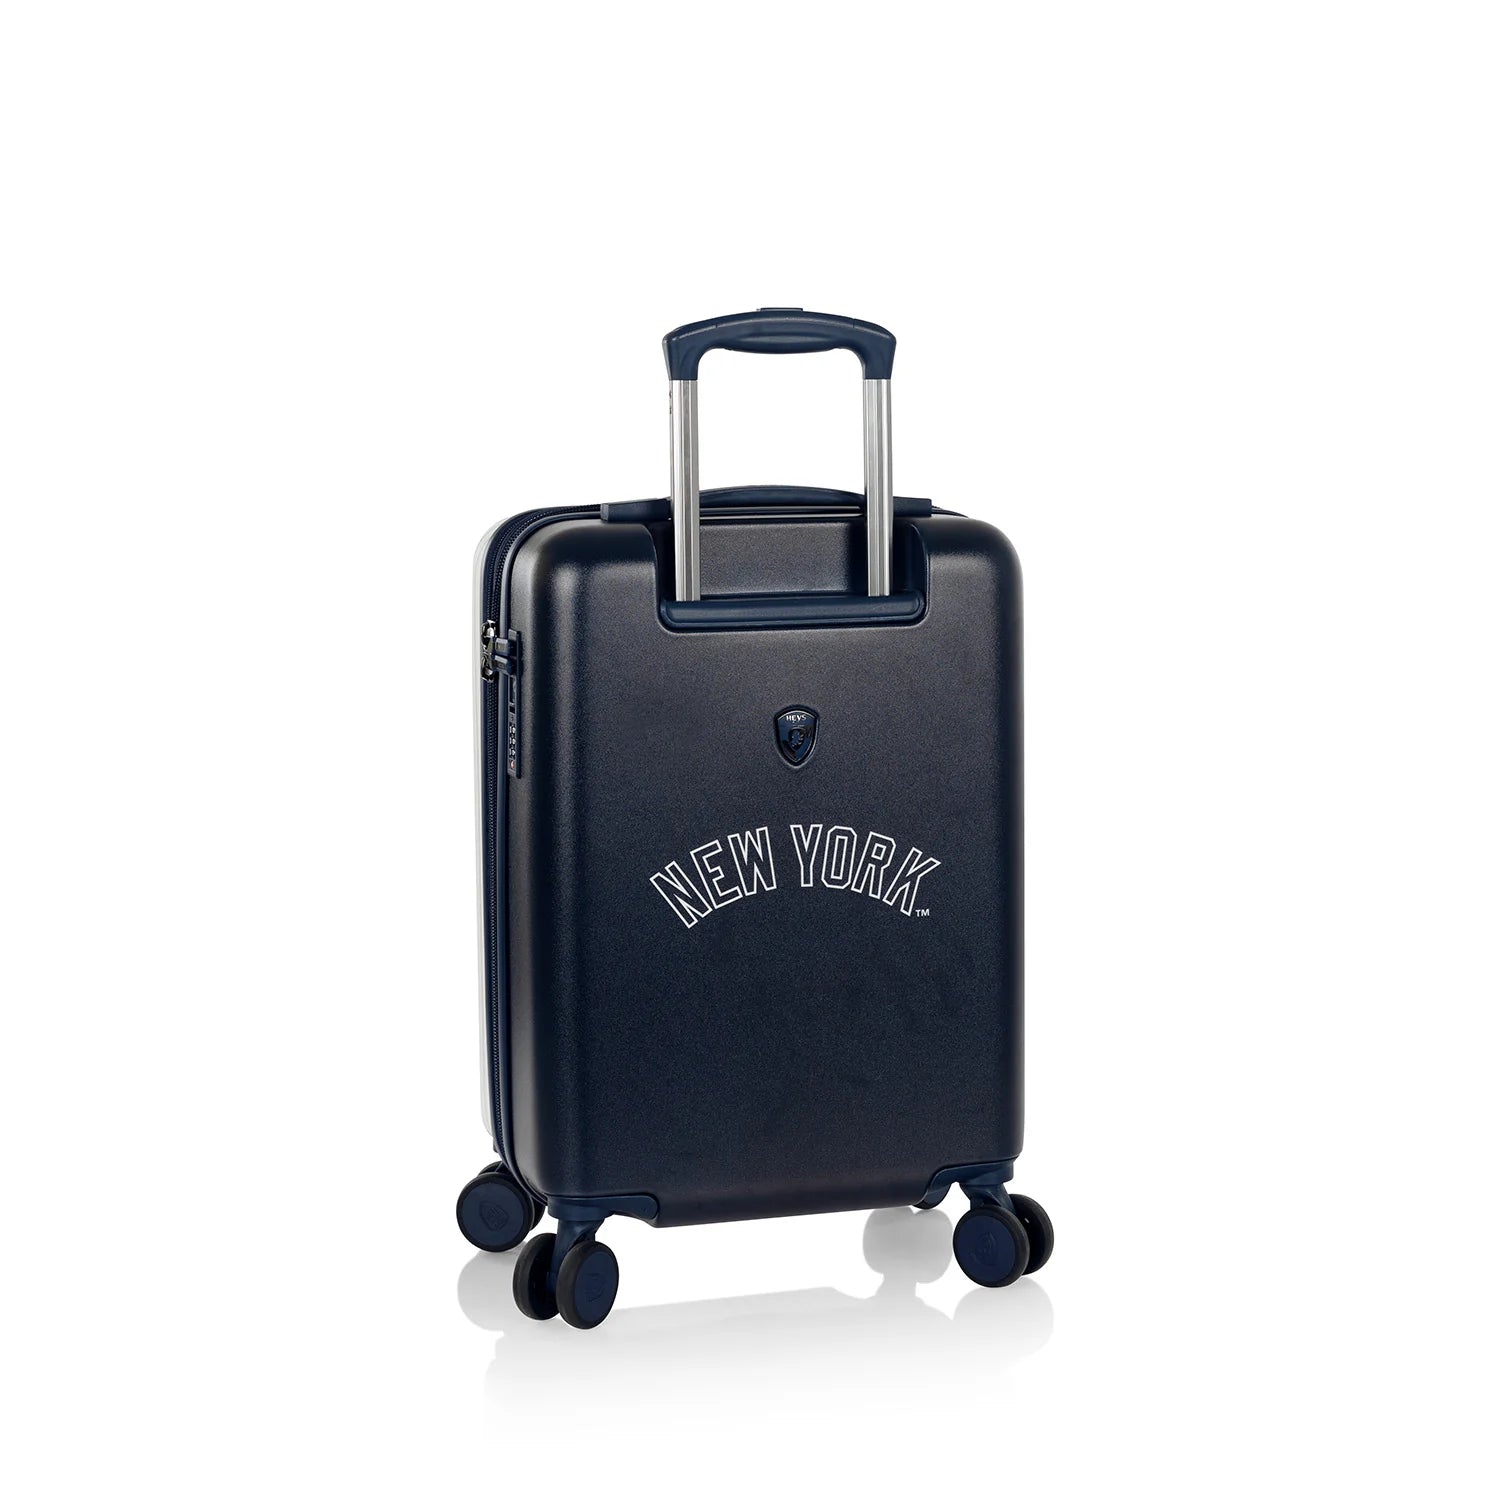 MLB Luggage 21" - New York Yankees